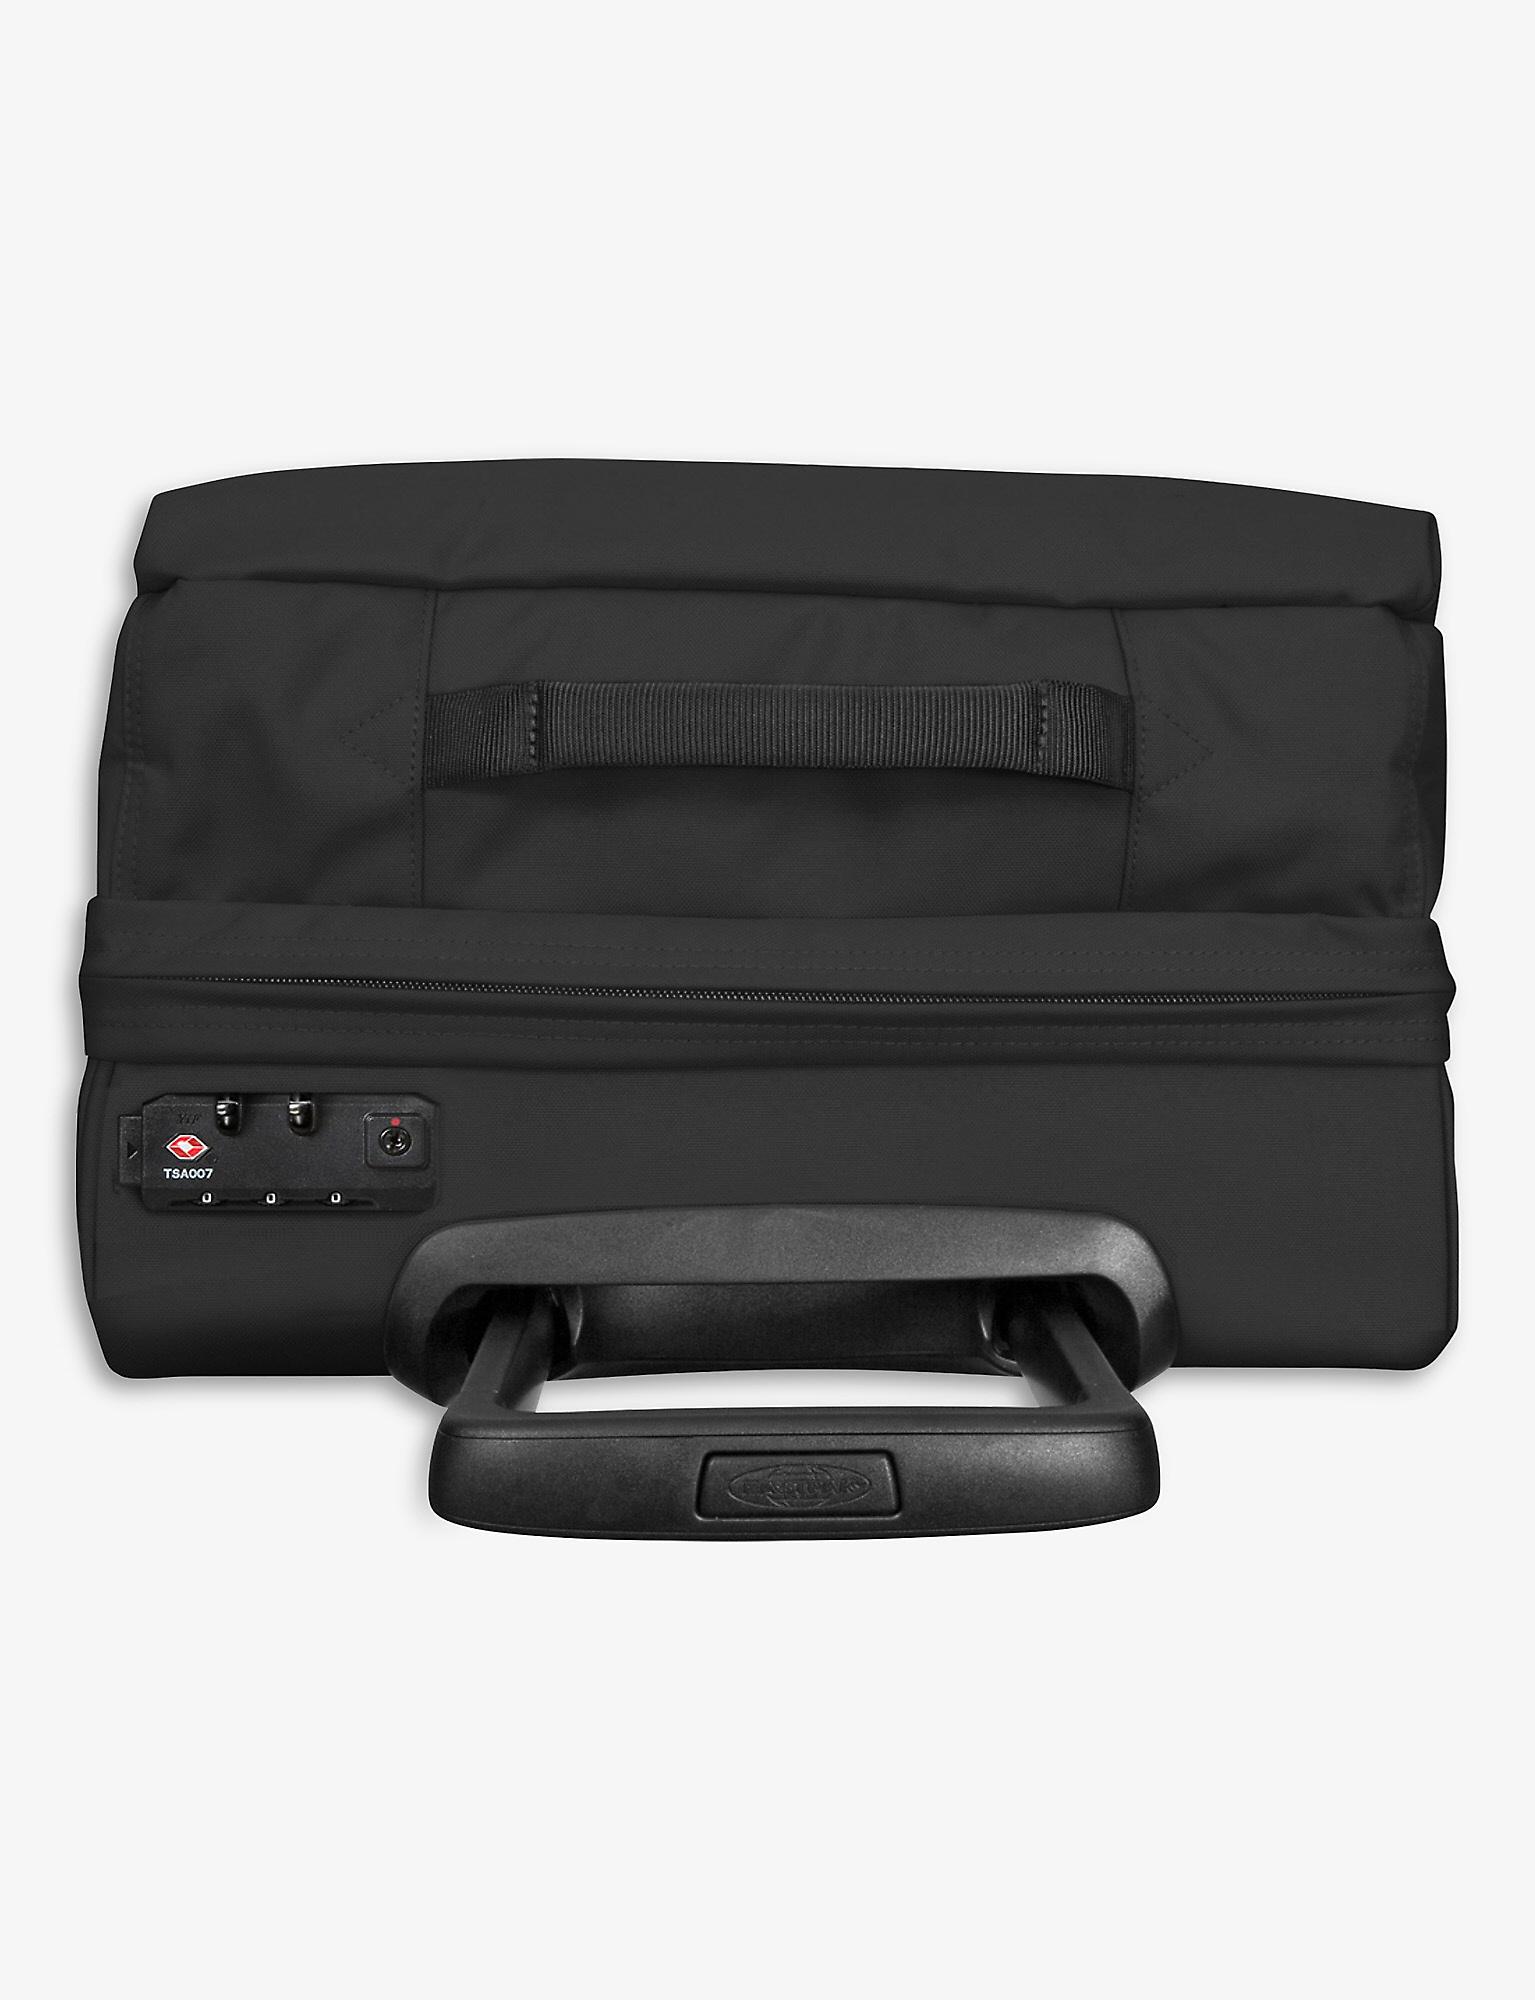 Eastpak Trans4 Cnnct Medium Shell Suitcase in Black | Lyst